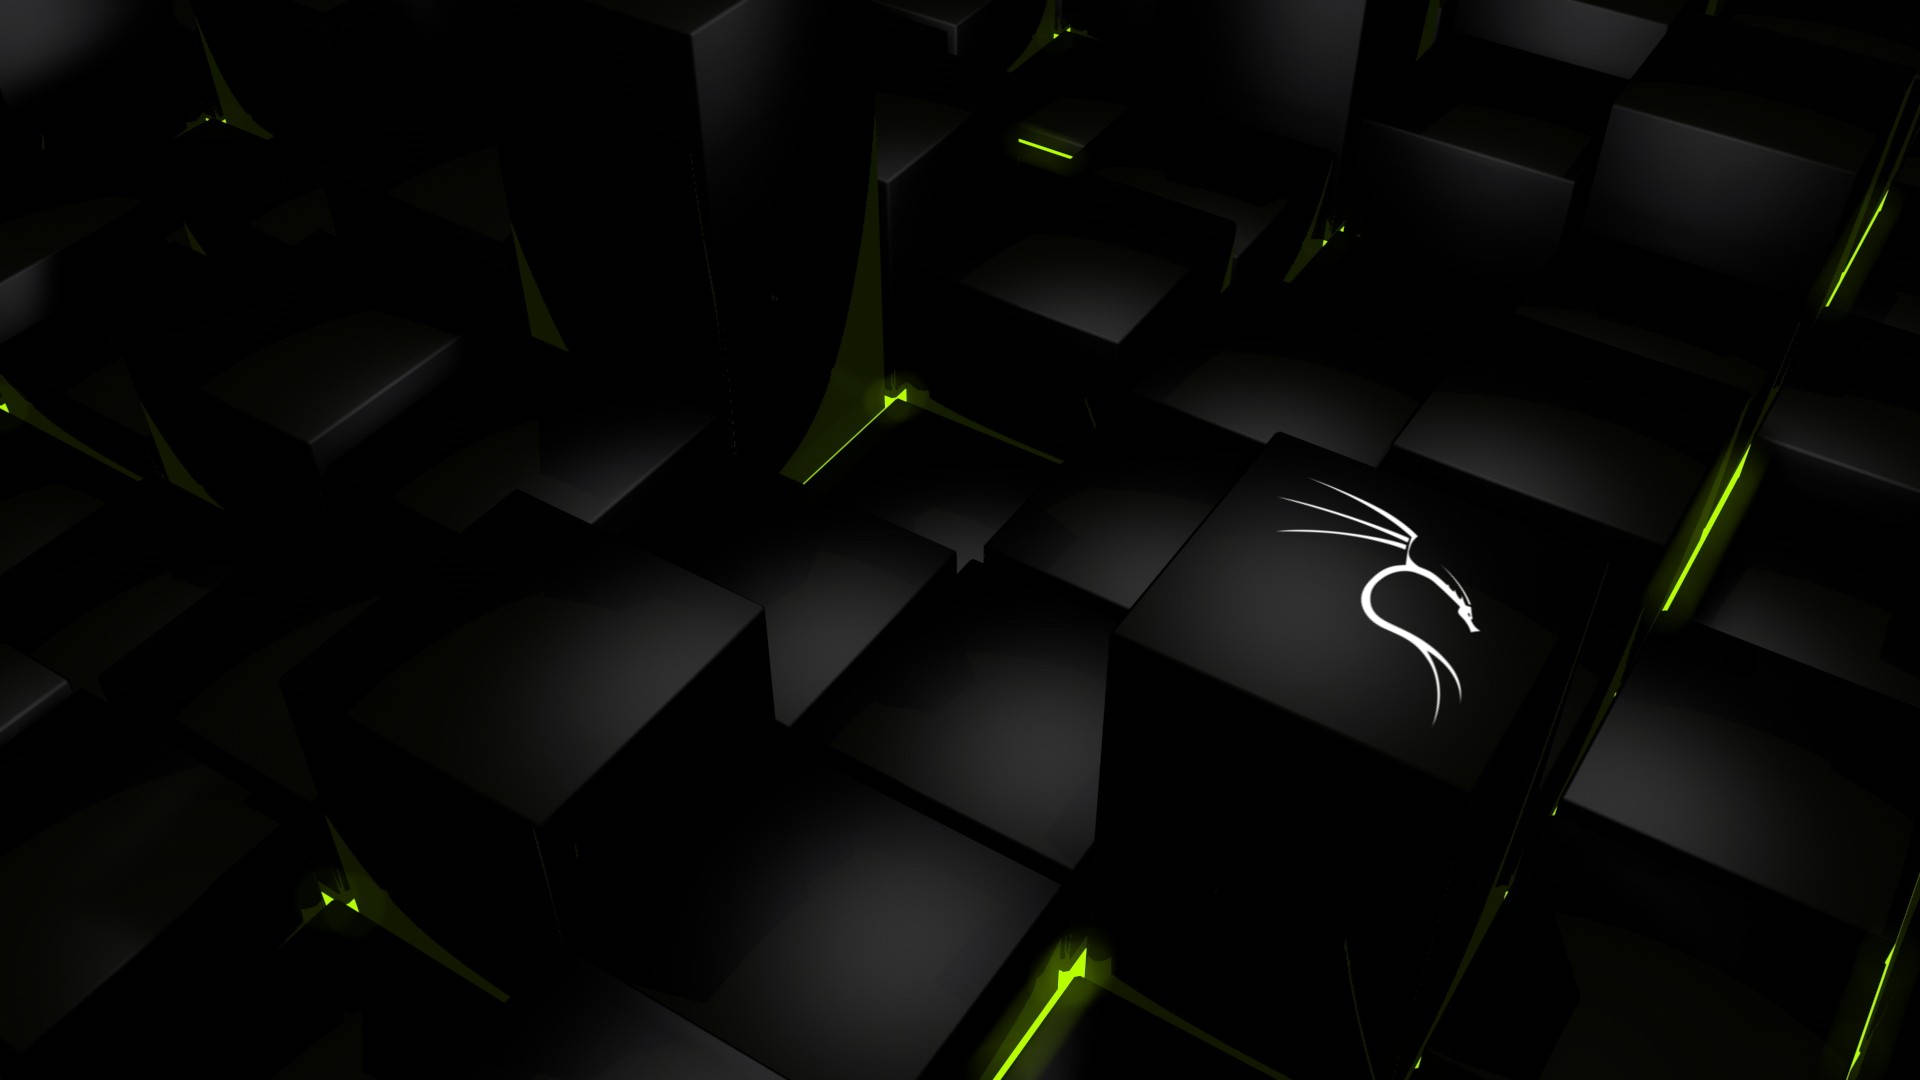 Glowing White Dragon Kali Linux Background